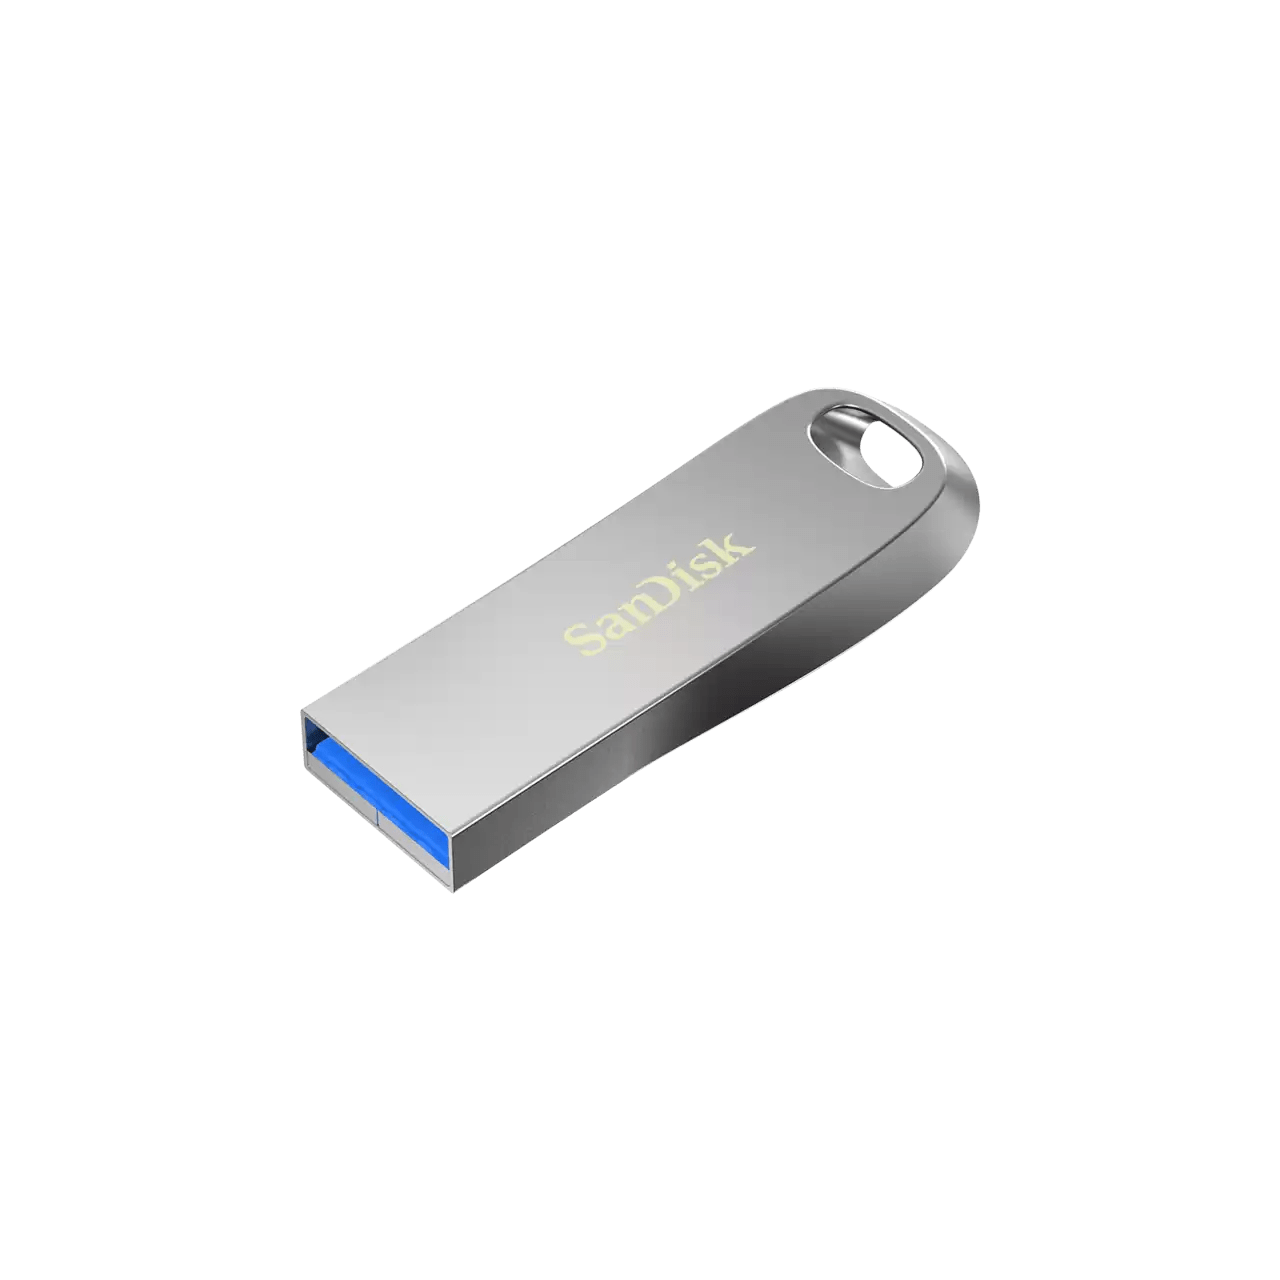 SanDisk 64GB Ultra Luxe USB 3.1 隨身碟 (SDCZ74 - 064G - G46) - Fever Electrics 電器熱網購平台